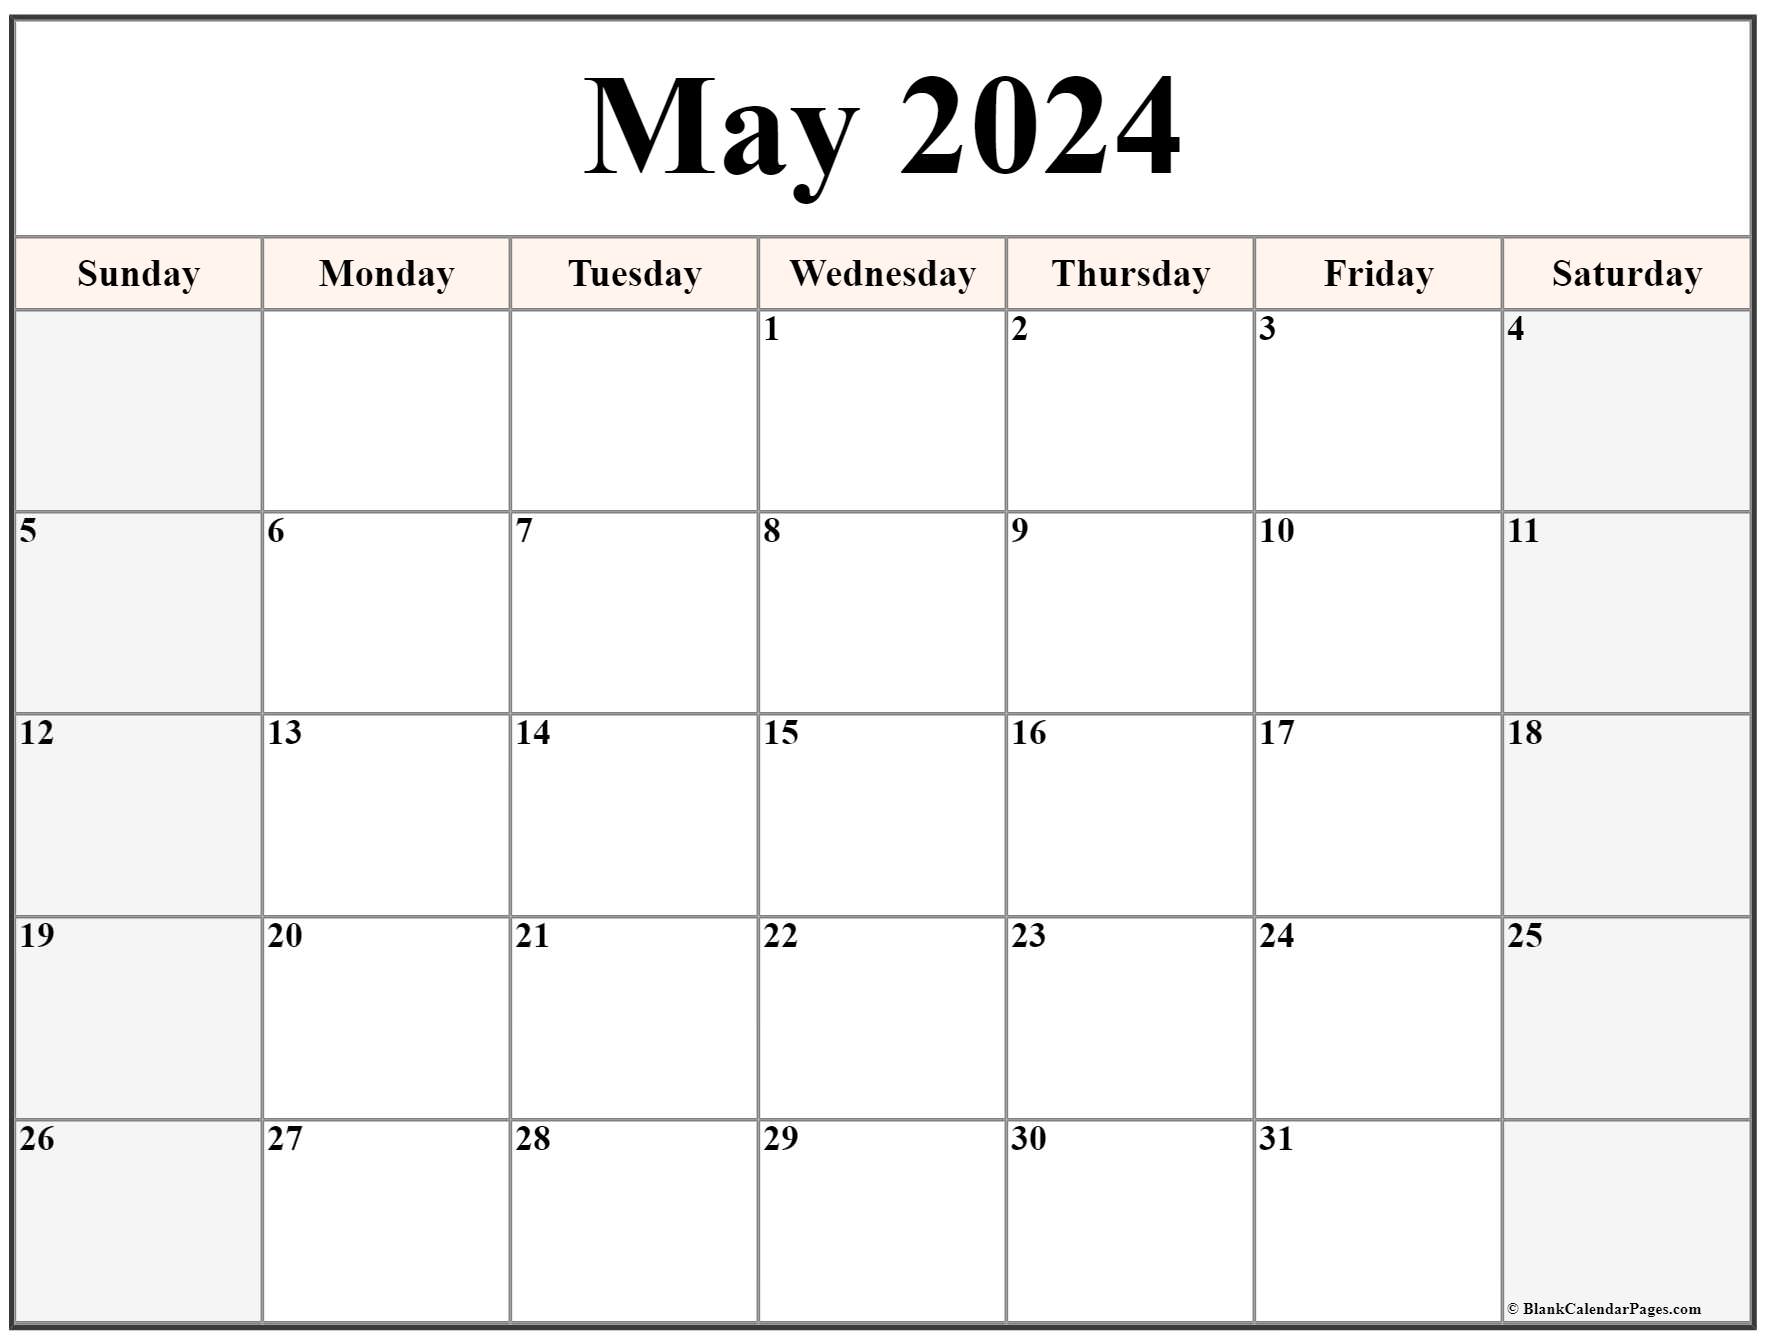 Free May 2022 Calendar May 2022 Calendar | Free Printable Calendar Templates